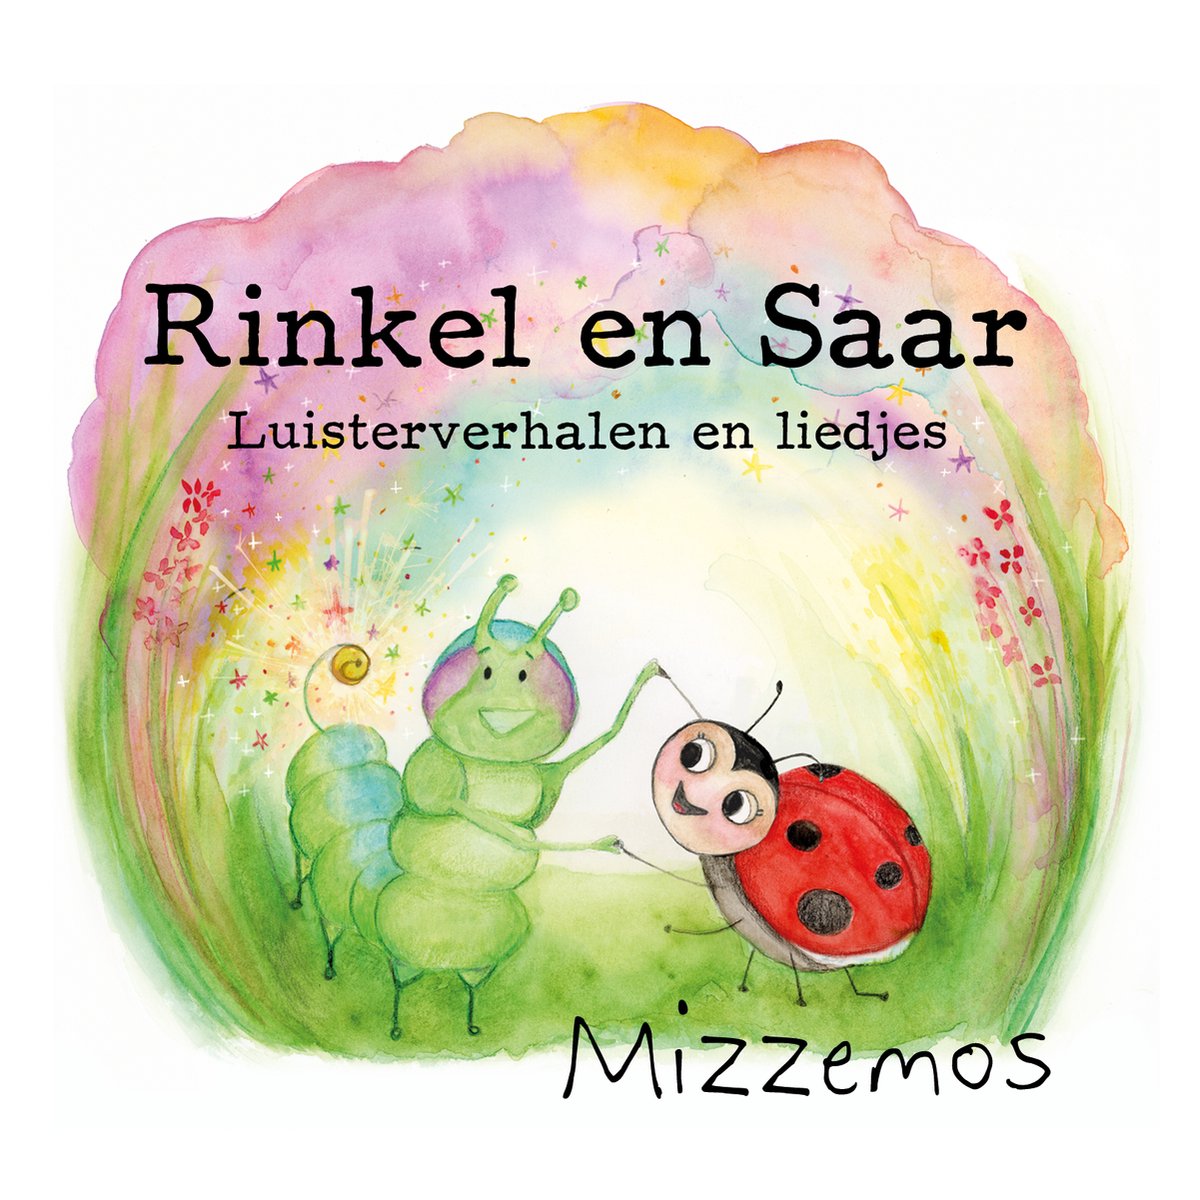 Mizzemos Kinderliedjes - CD - Rinkel en Saar Luisterverhalen en liedjes - Dubbel-cd - Mizzemos Kinderliedjes